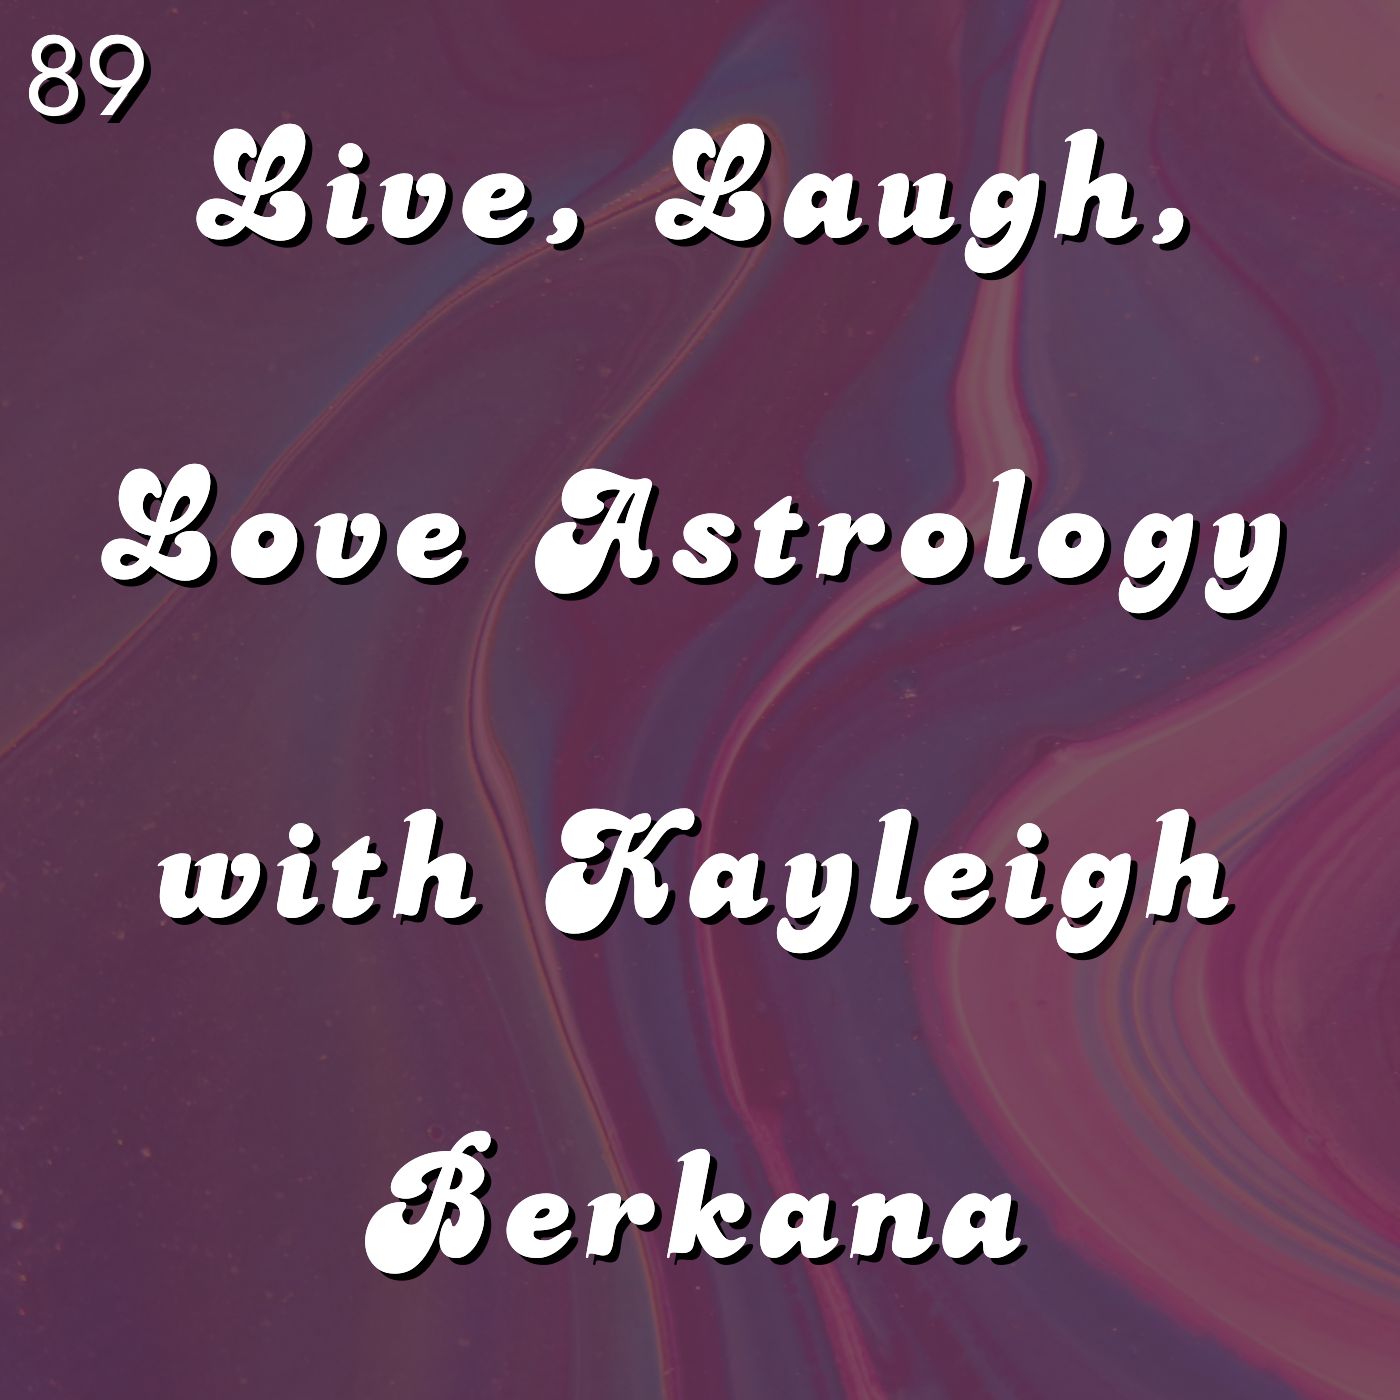 #89 - Live, Laugh, Love Astrology with Kayleigh Berkana